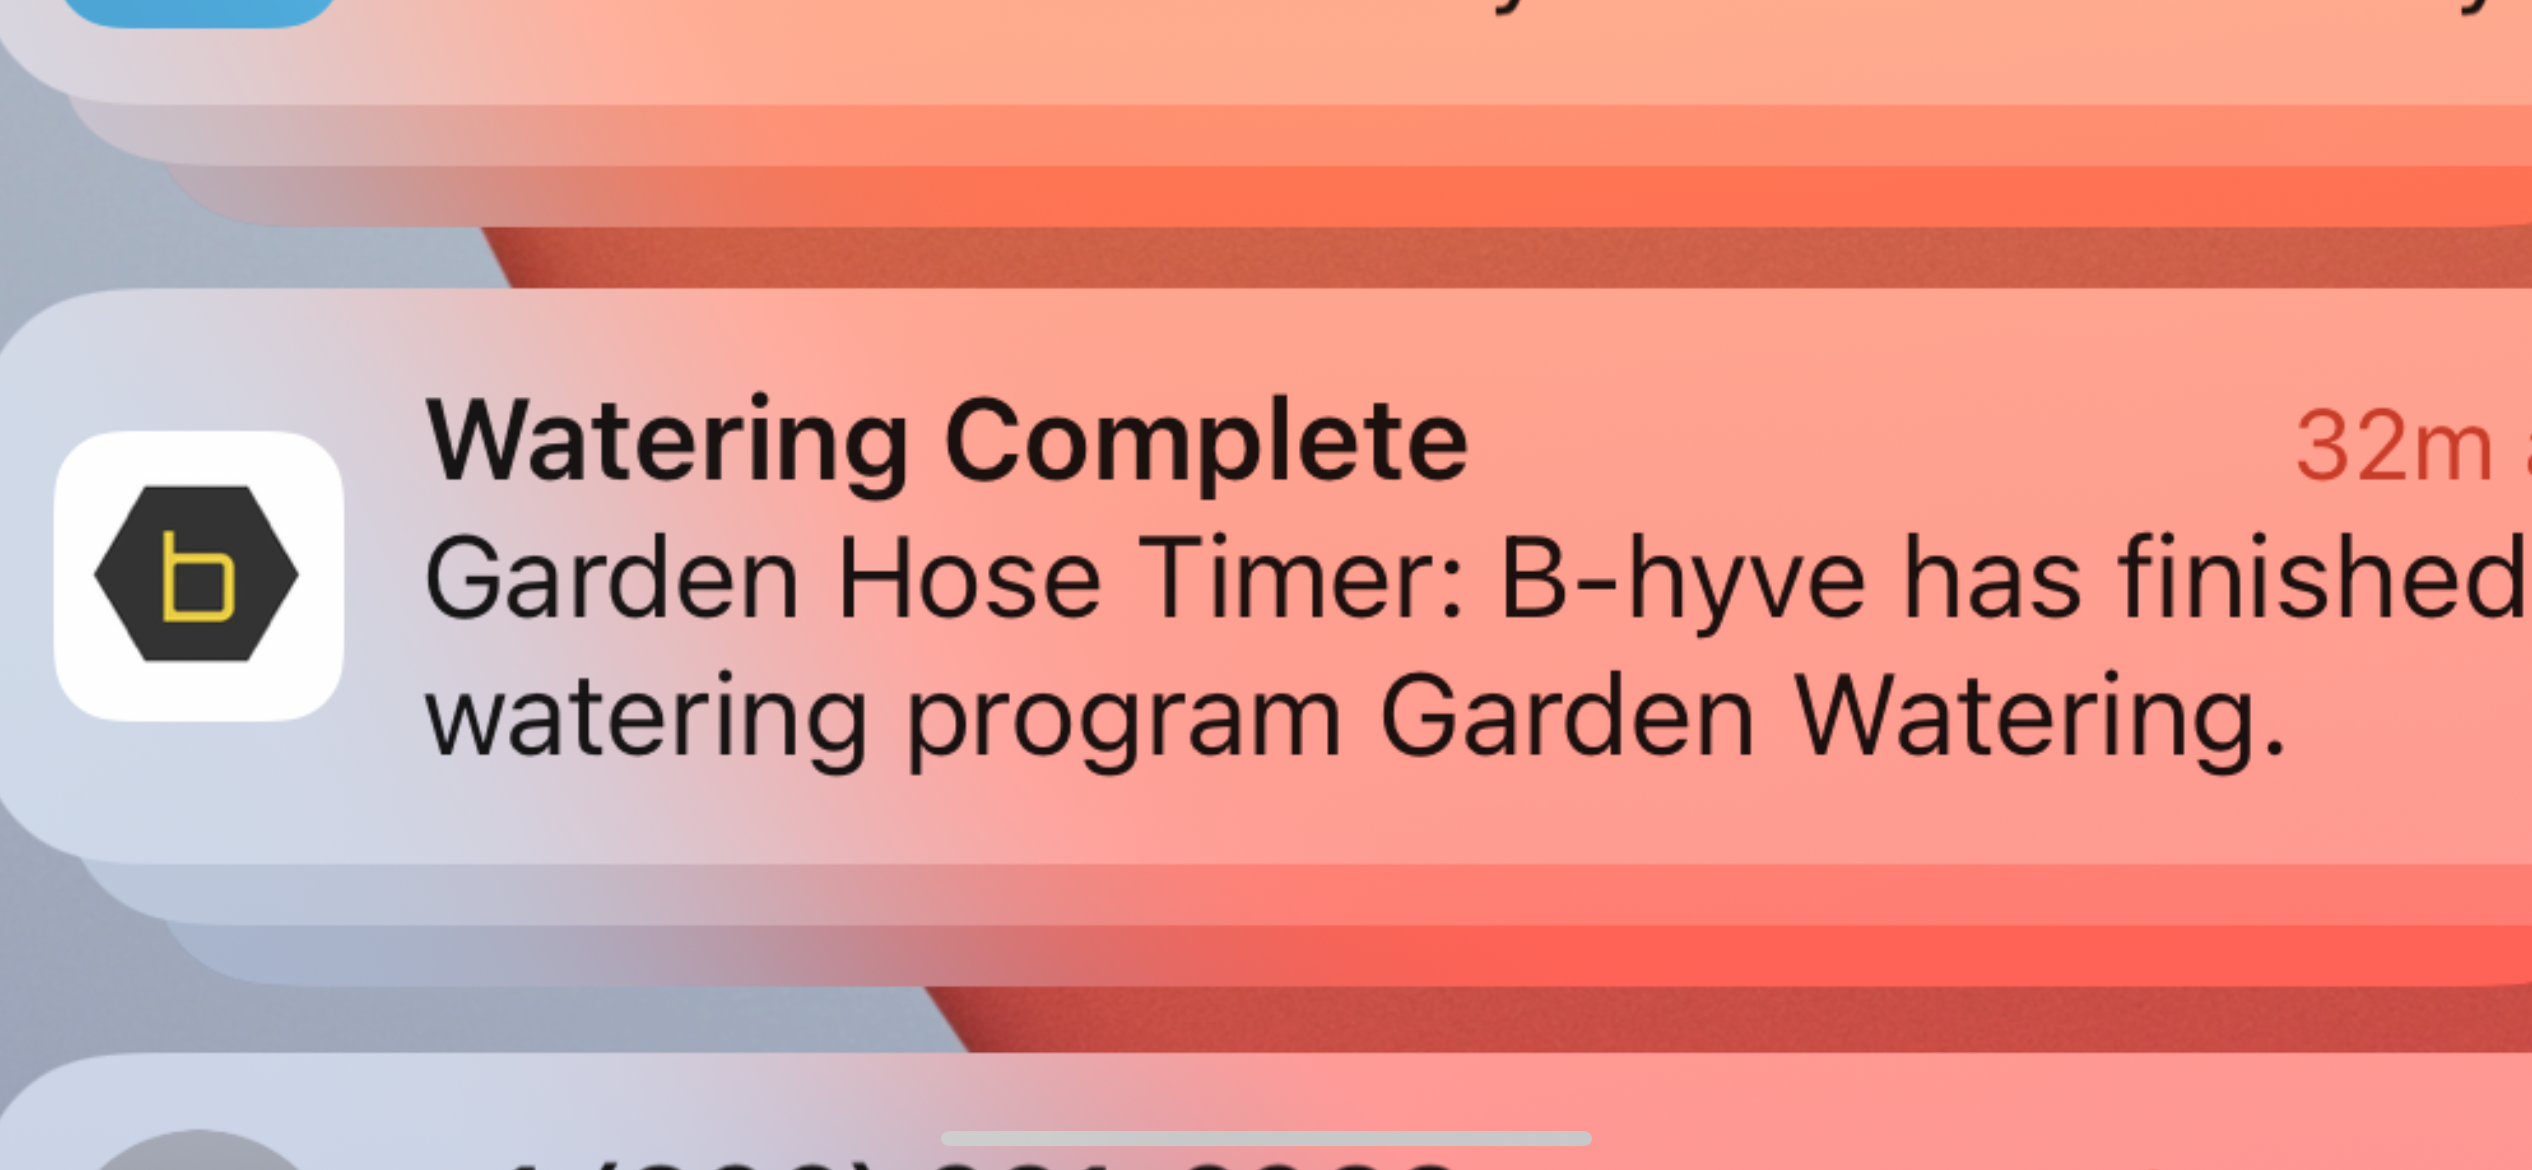 Resurrecting the Garden sprinkler hose timer for another season. The older the harder it gets!